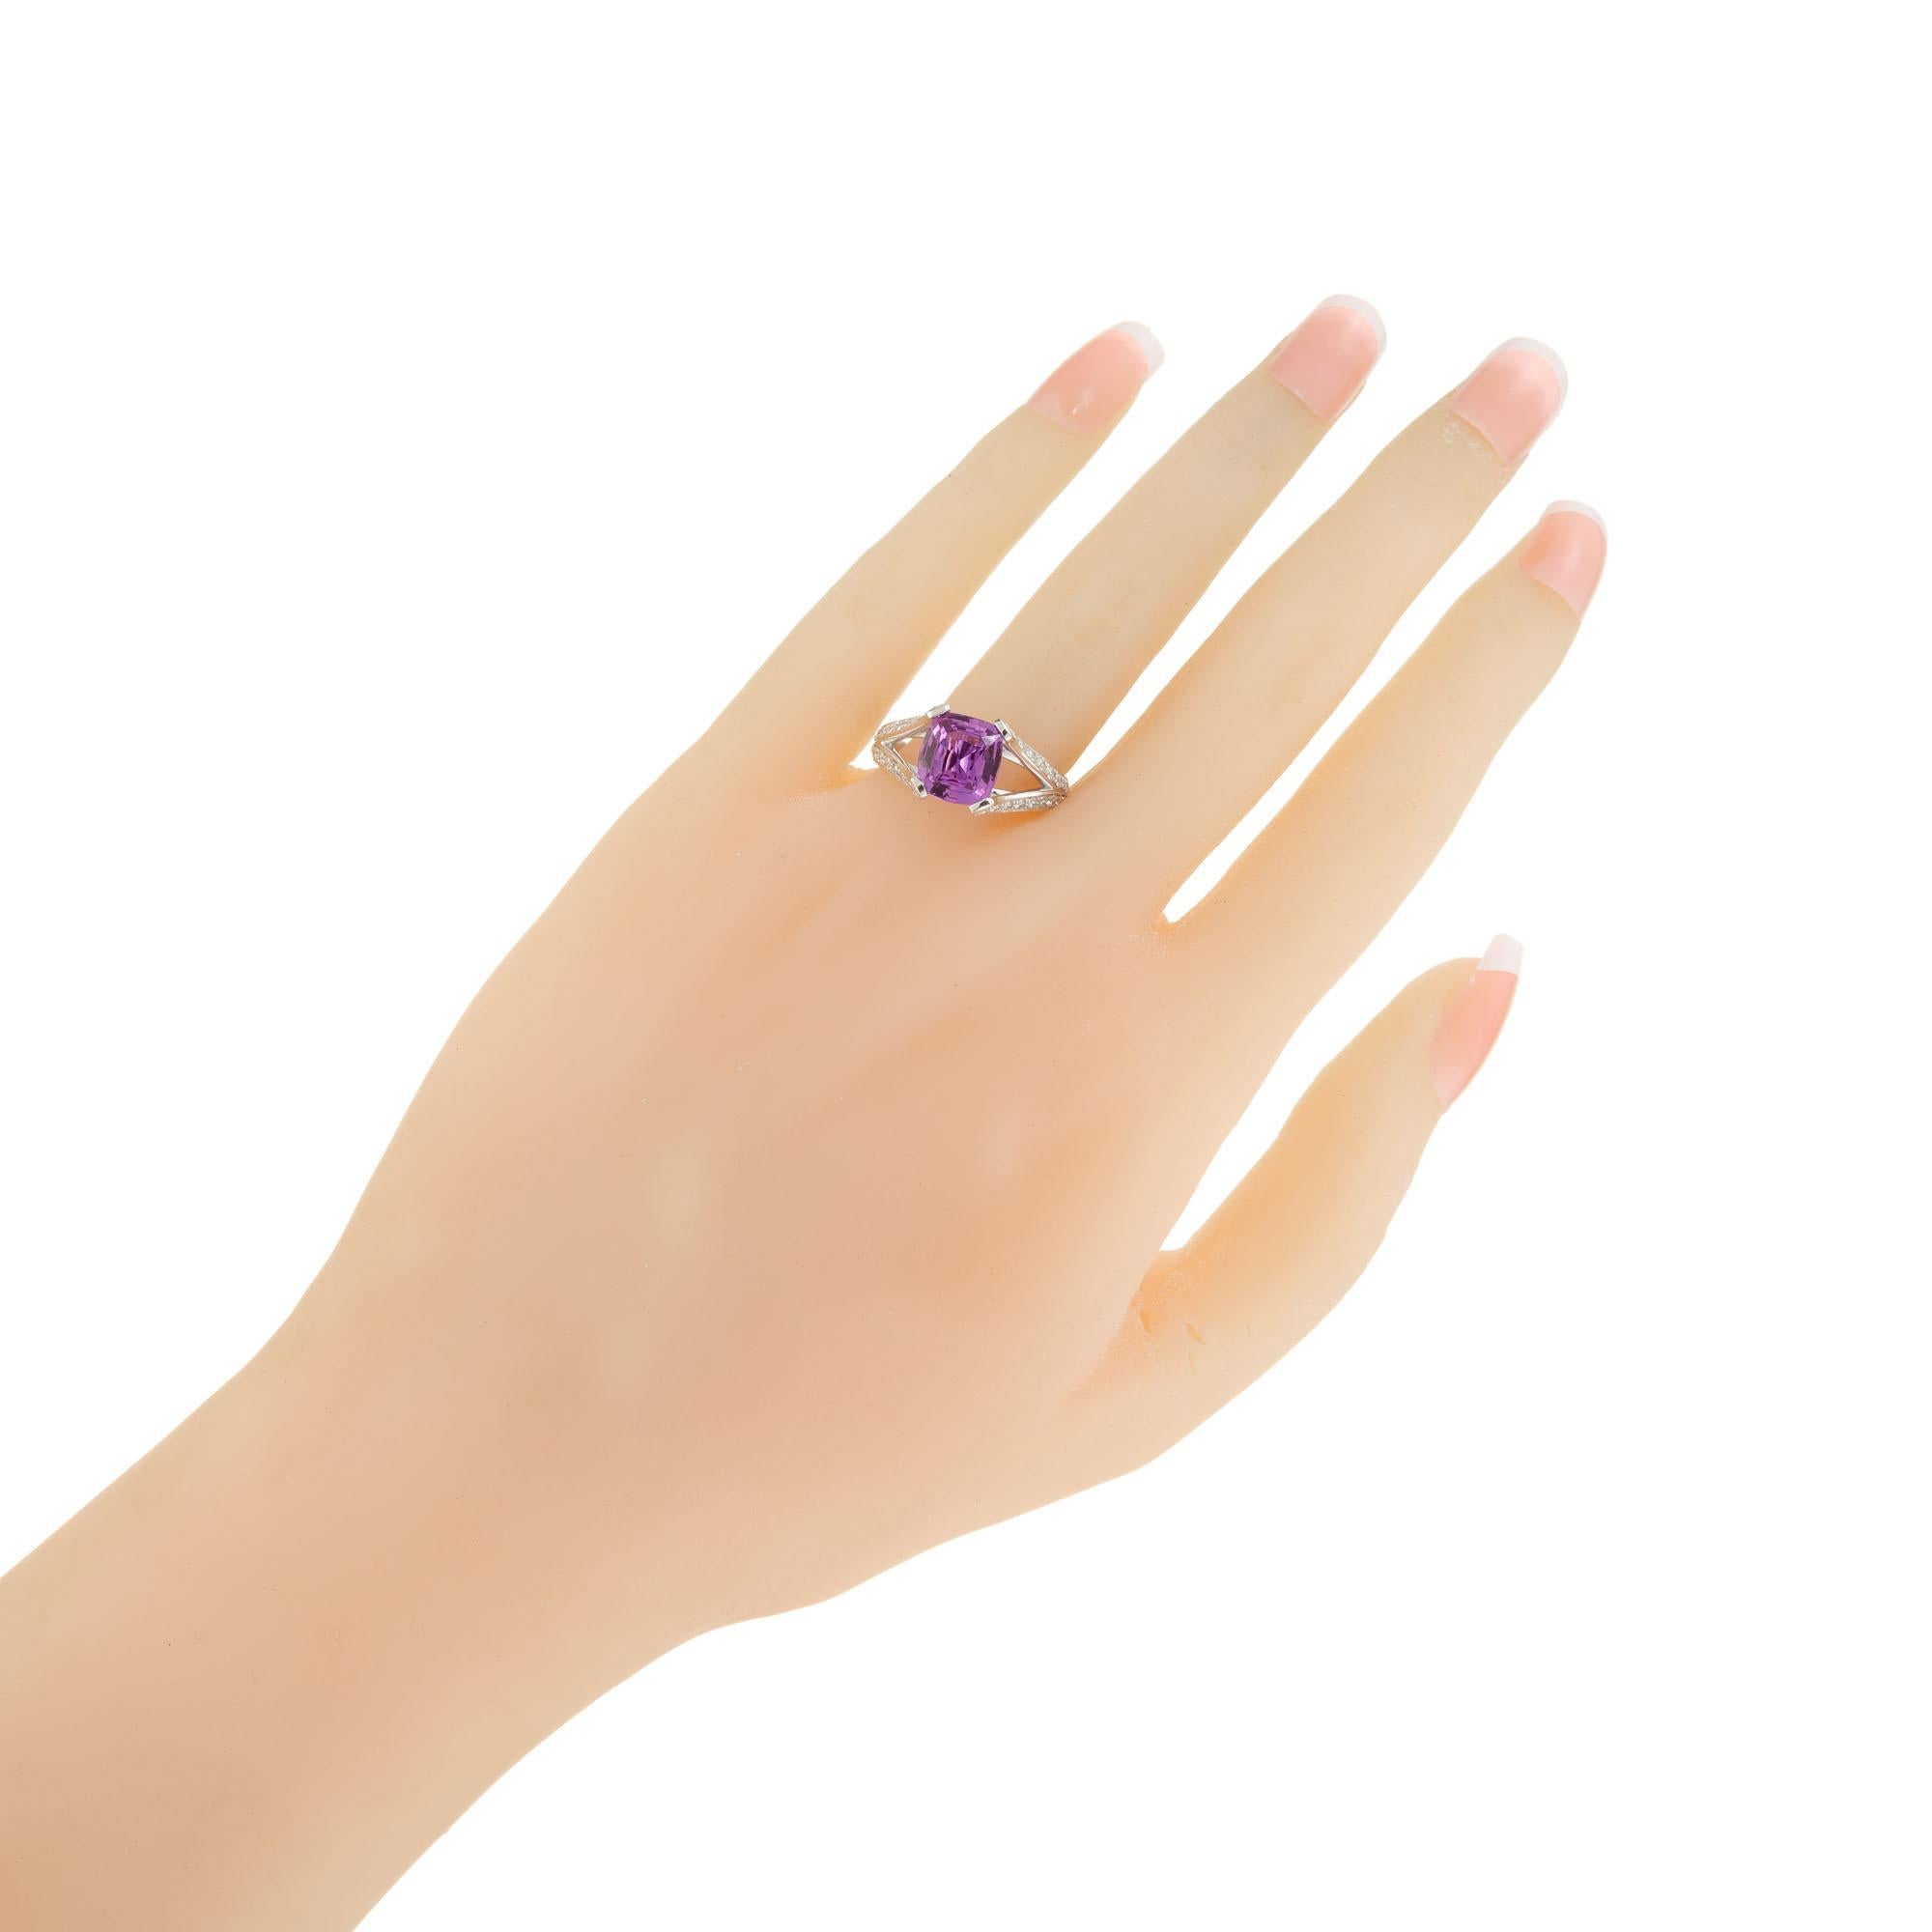 Peter Suchy GIA 2.76 Carat Cushion Cut Sapphire Diamond Platinum Engagement Ring For Sale 4